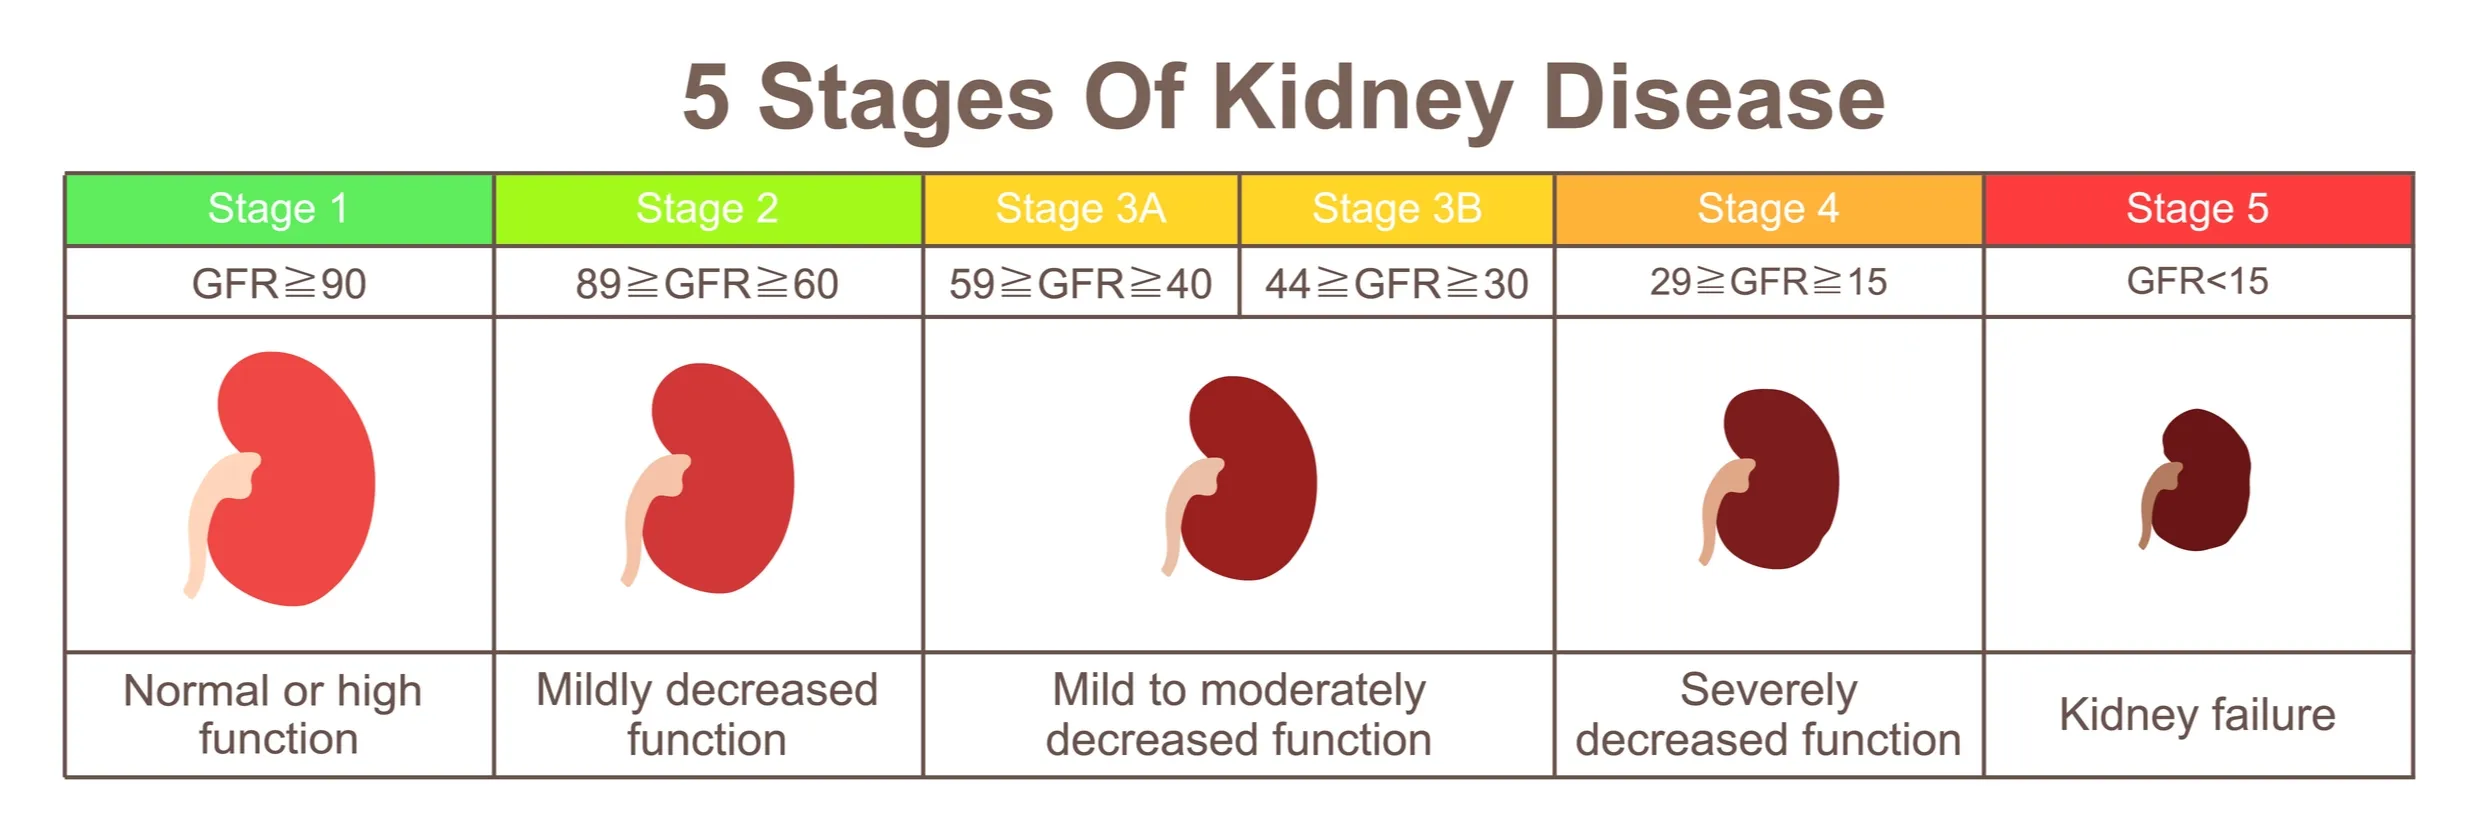 Five stages of kidney disease. 